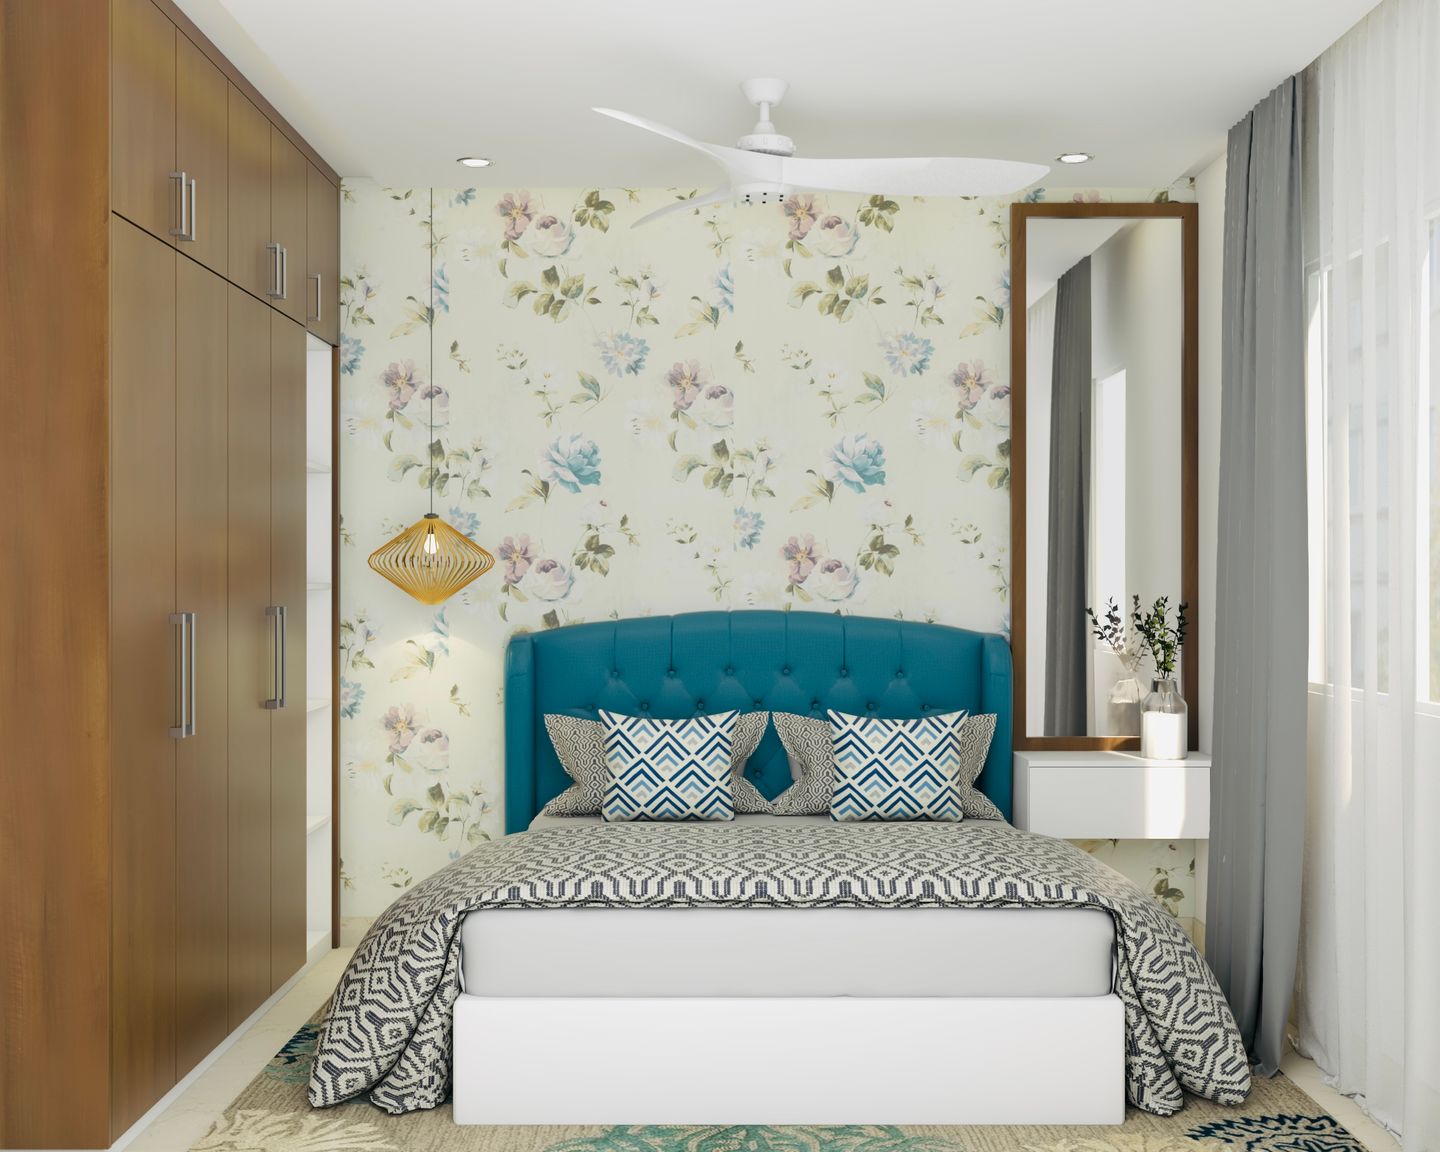 Guest Bedroom Design With Floral Wallpaper - Livspace